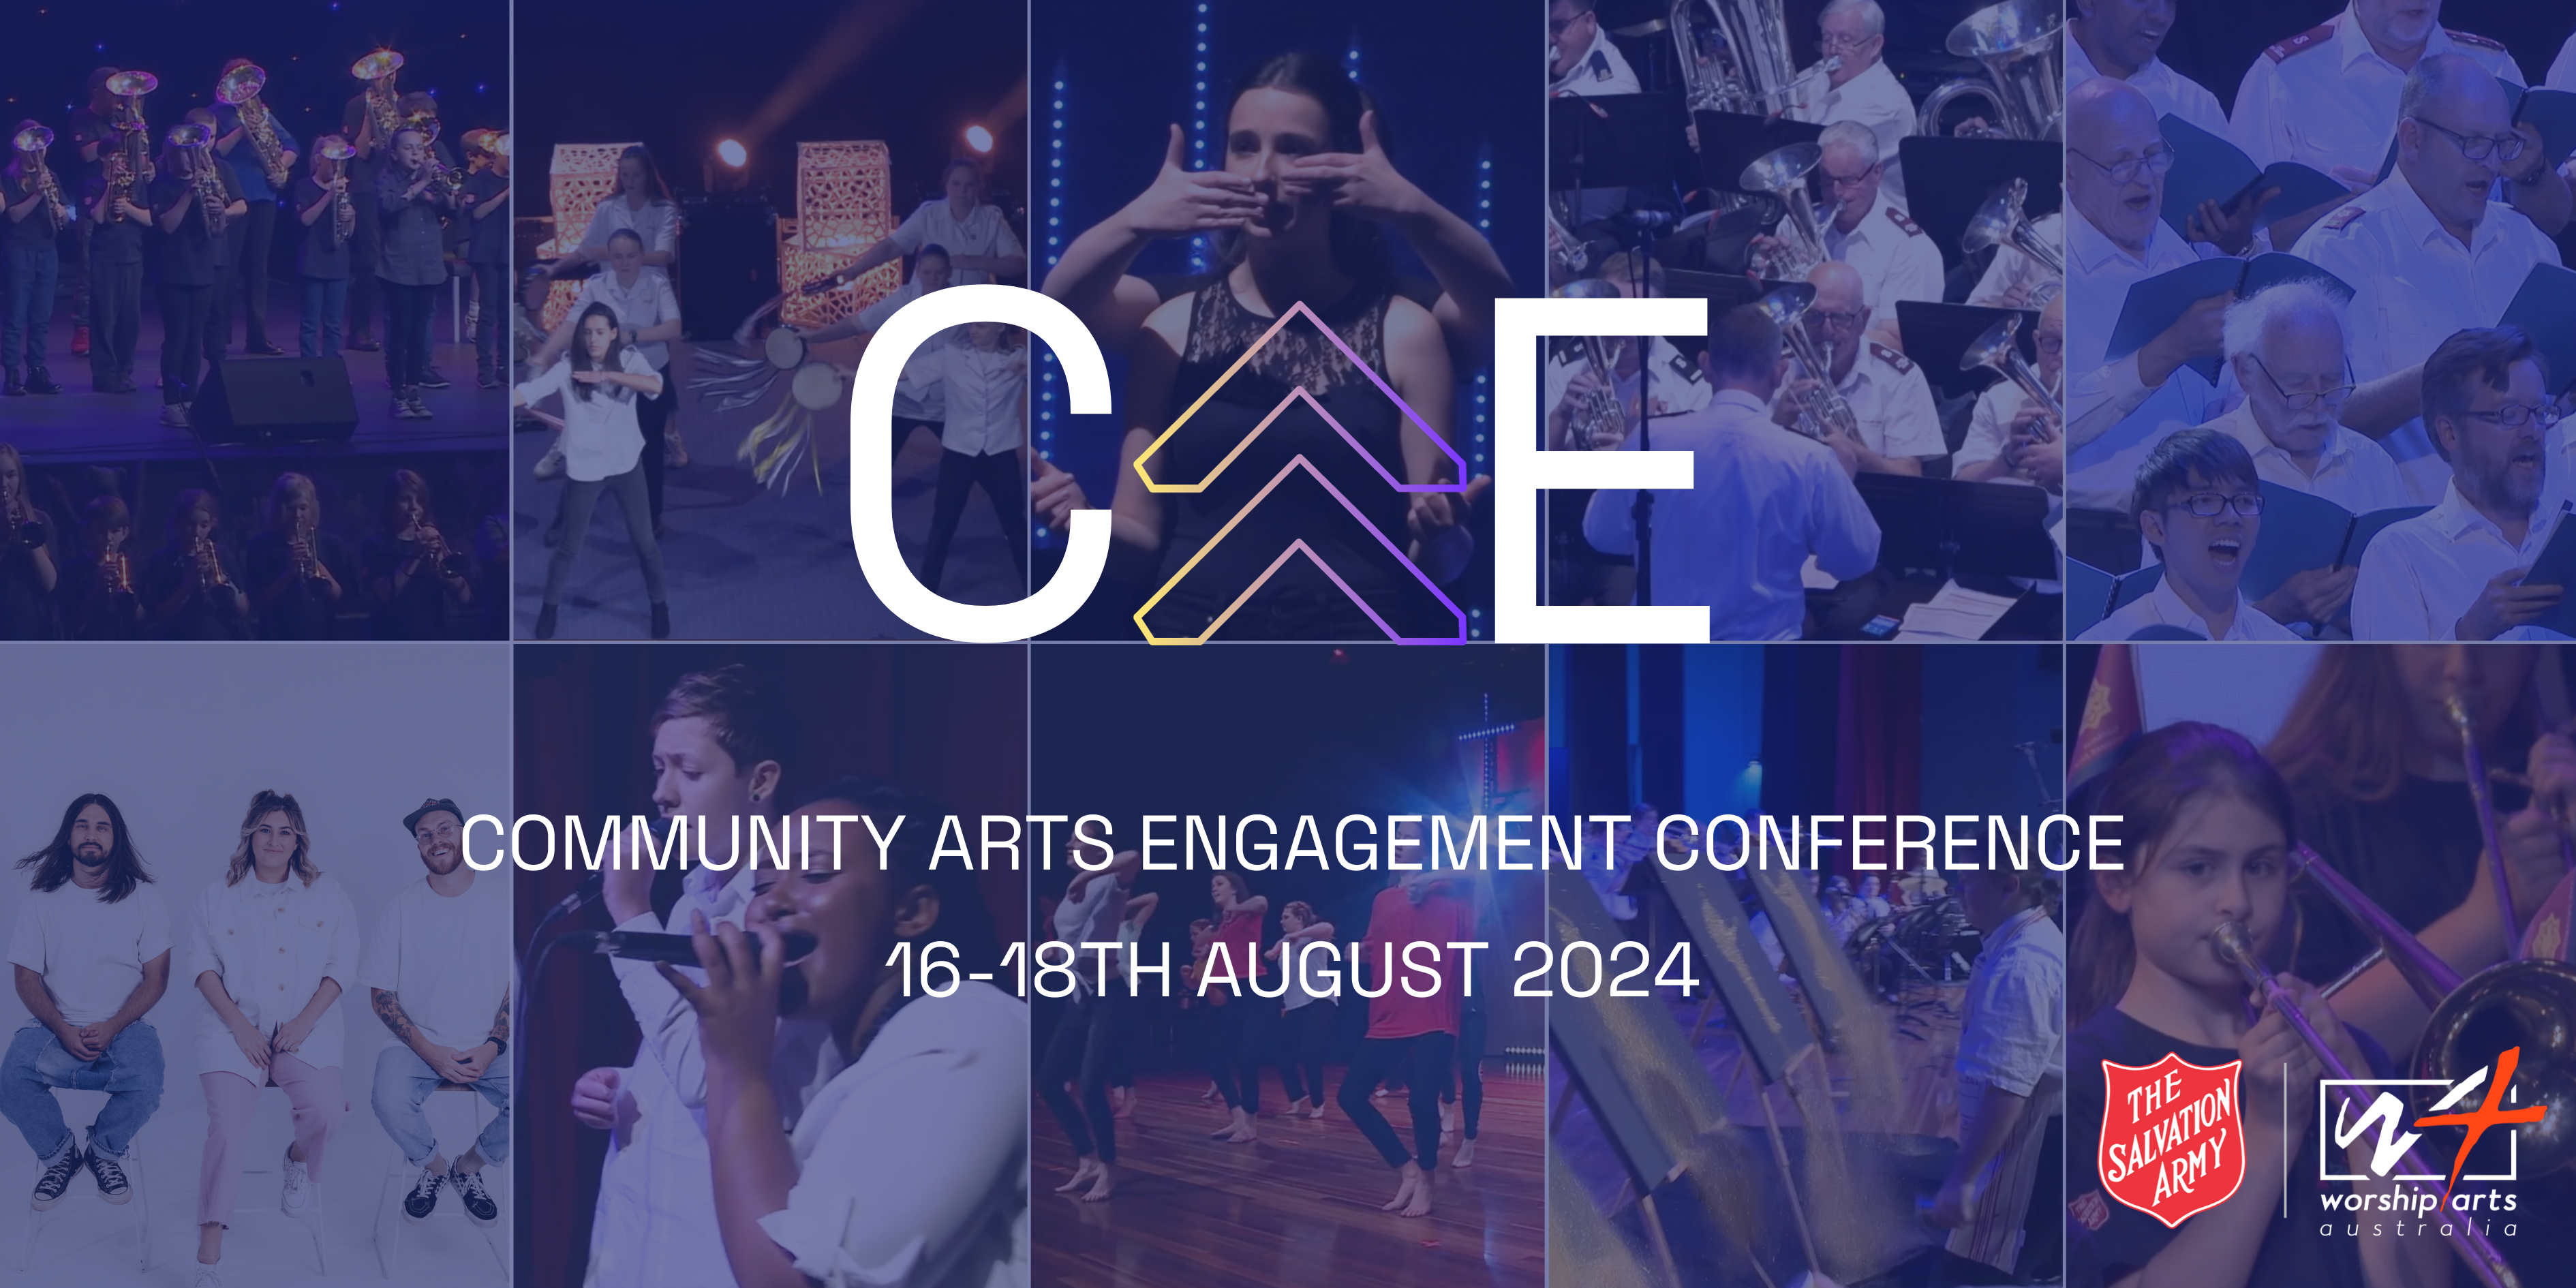 Community Arts Engagement Conference